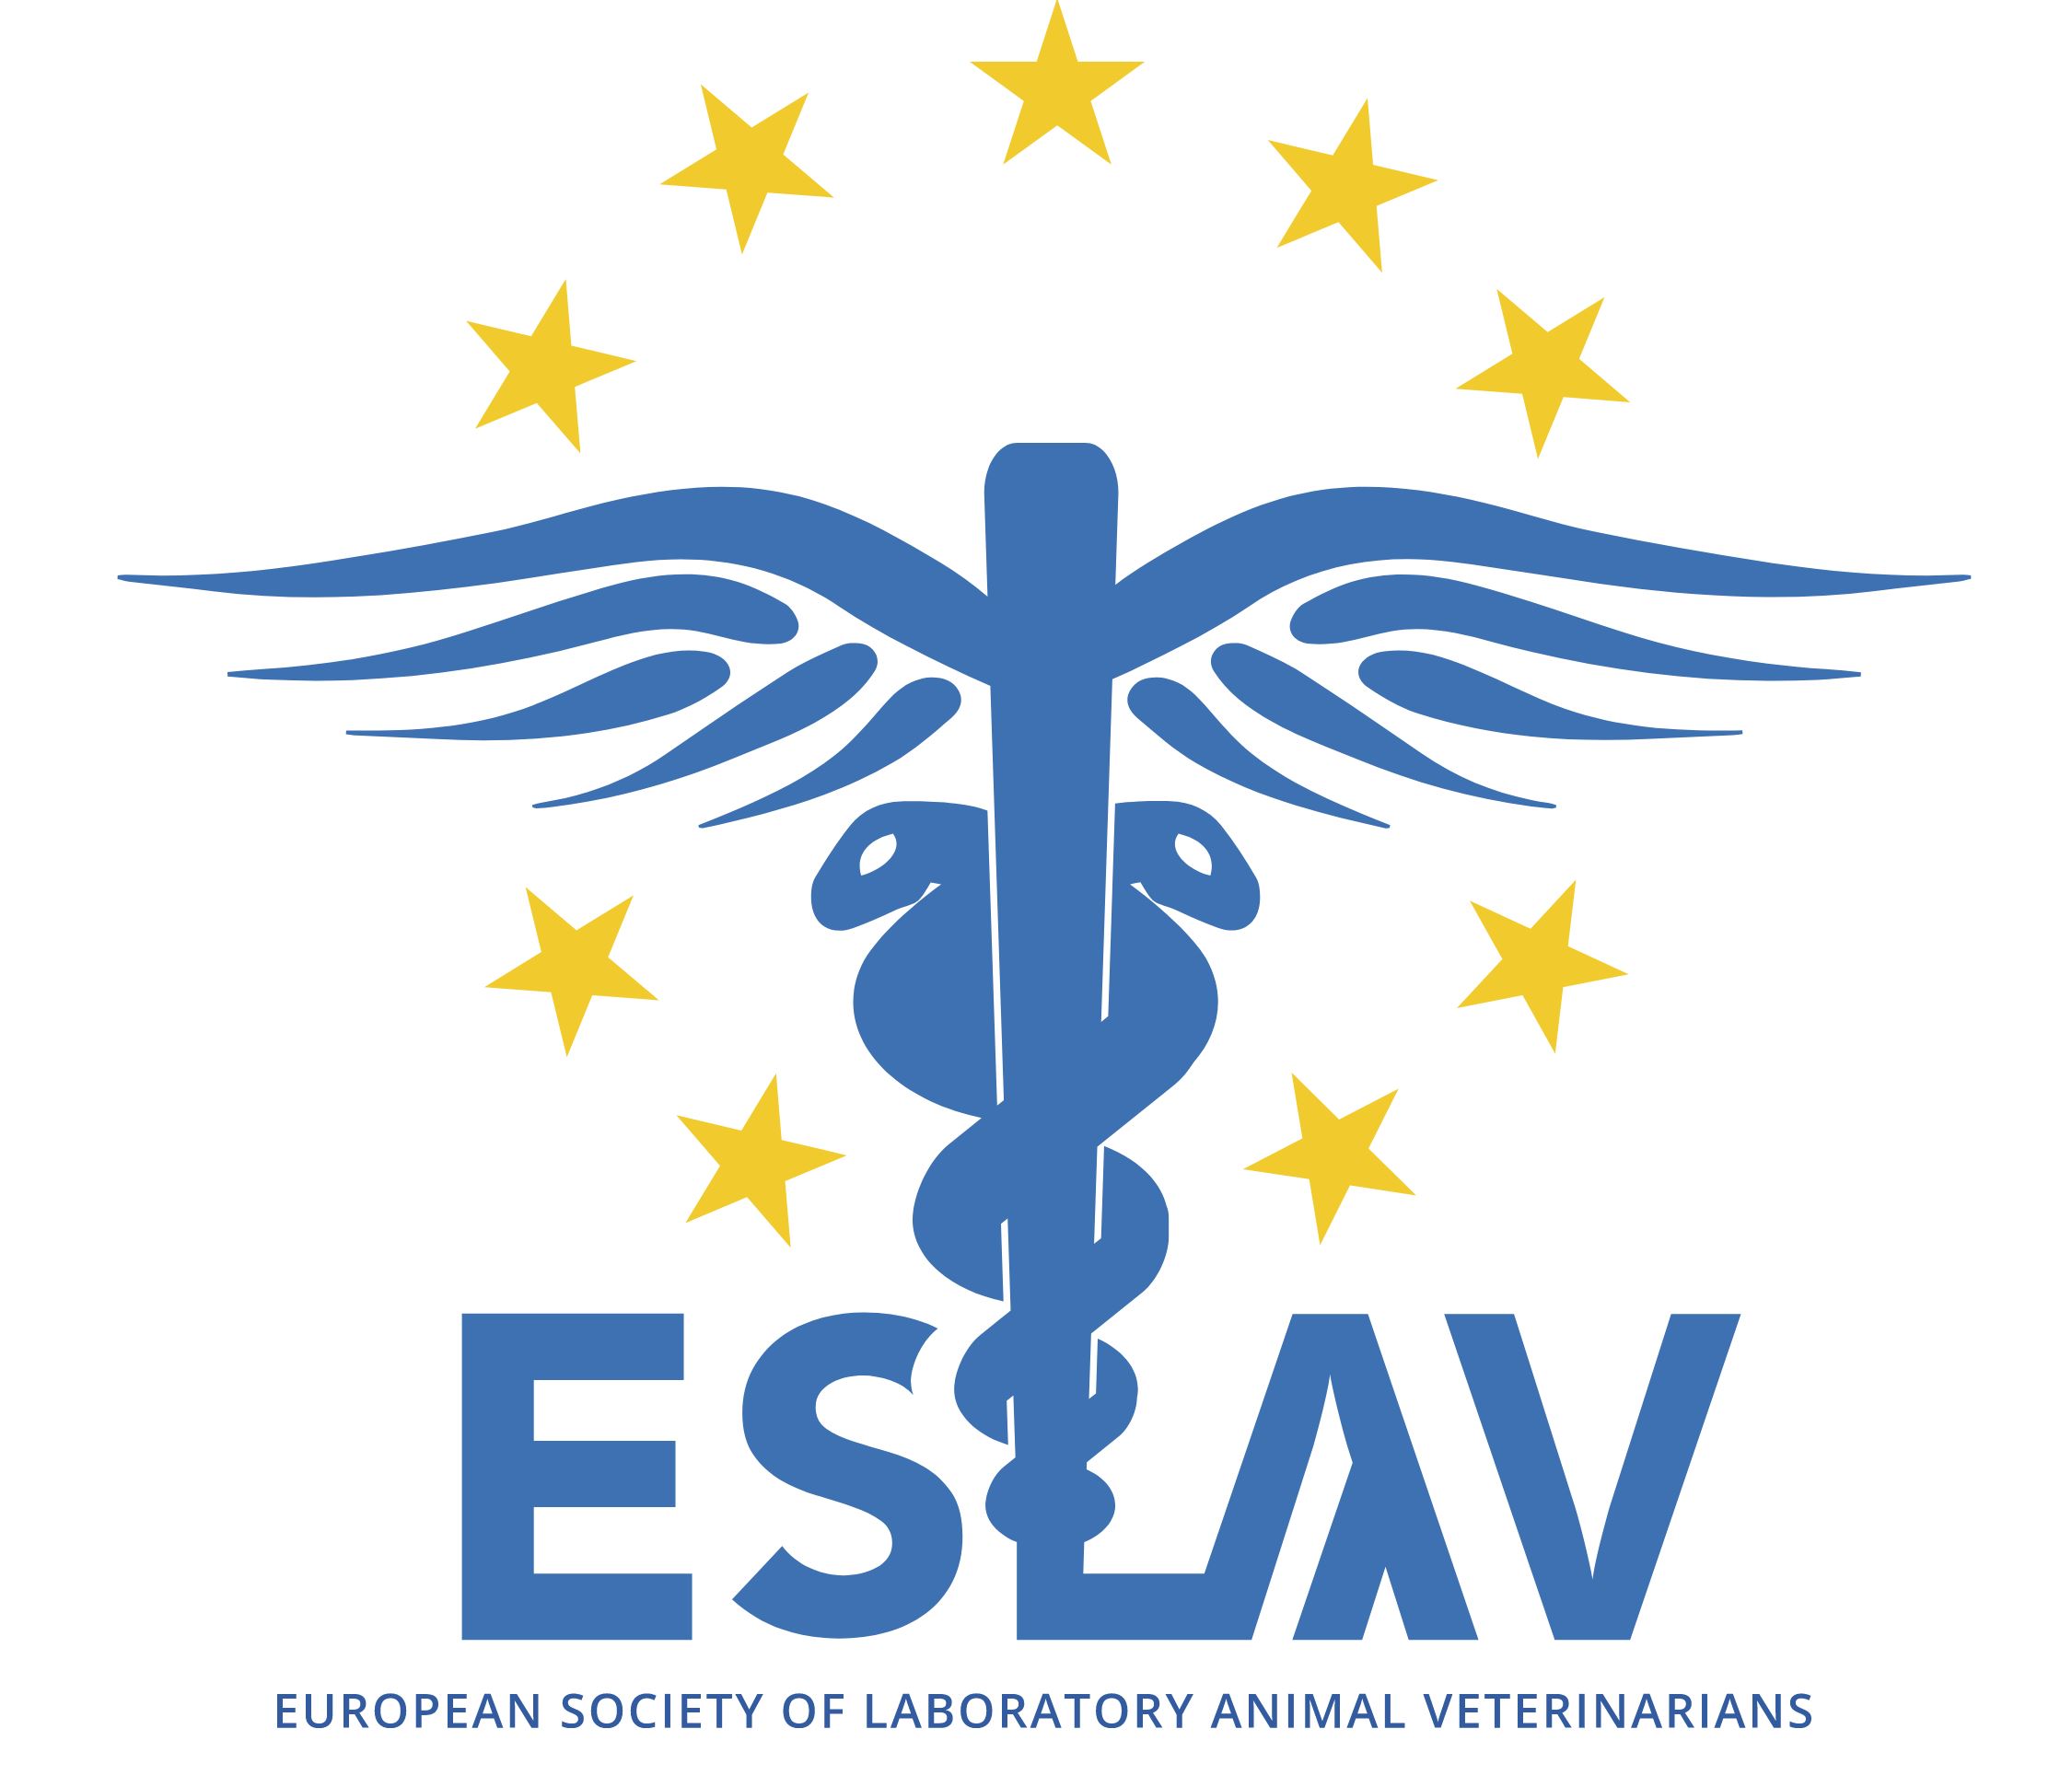 ESLAV – EUROPEAN SOCIETY OF LABORATORY ANIMAL VETERINARIANS